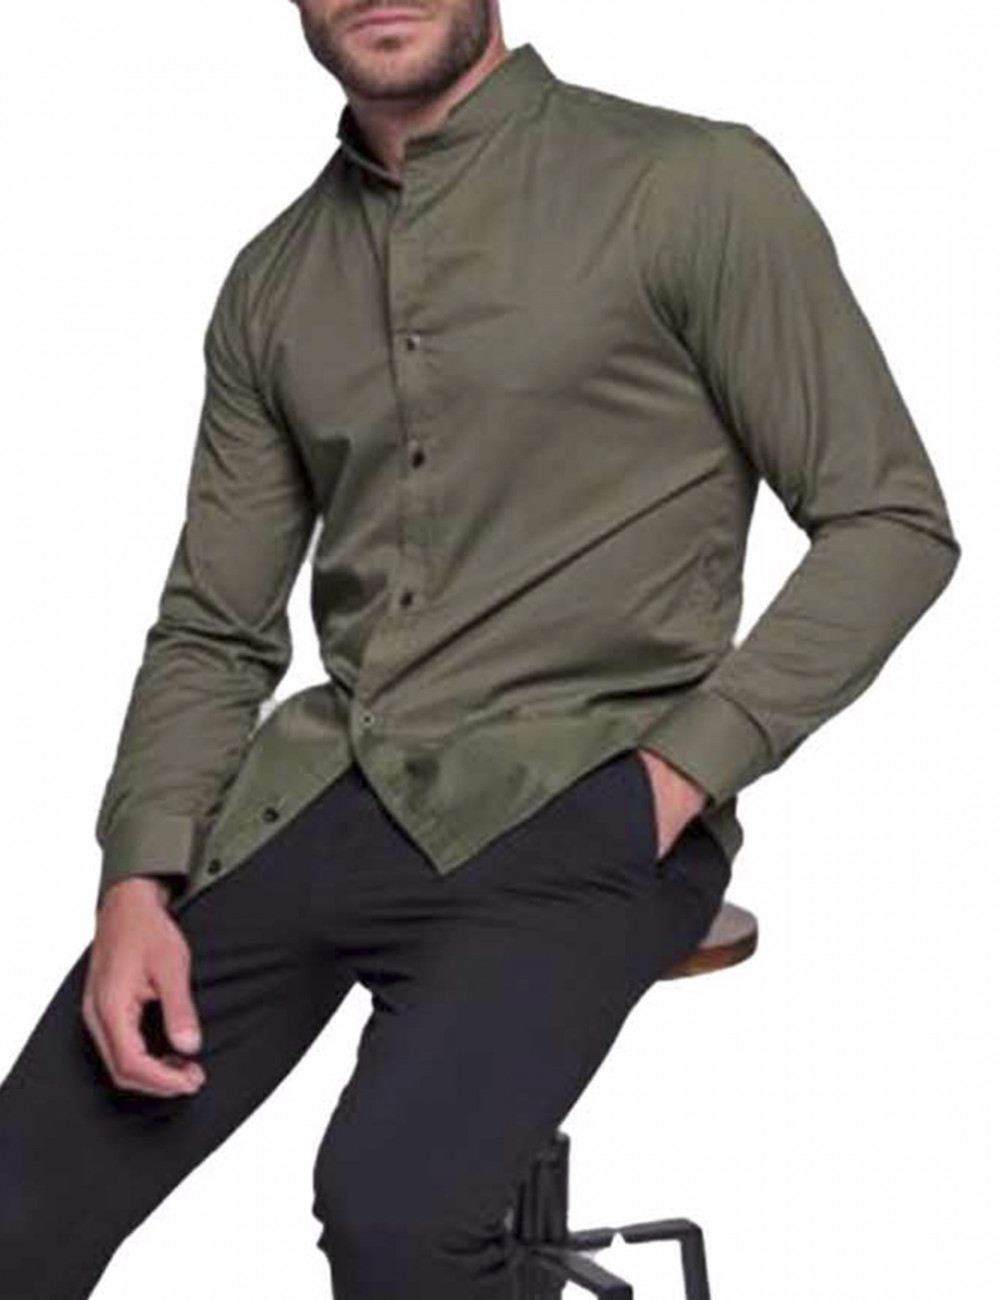 Ben Tailor ανδρικό χακί πουκάμισο με μάο γιακά 0589Q